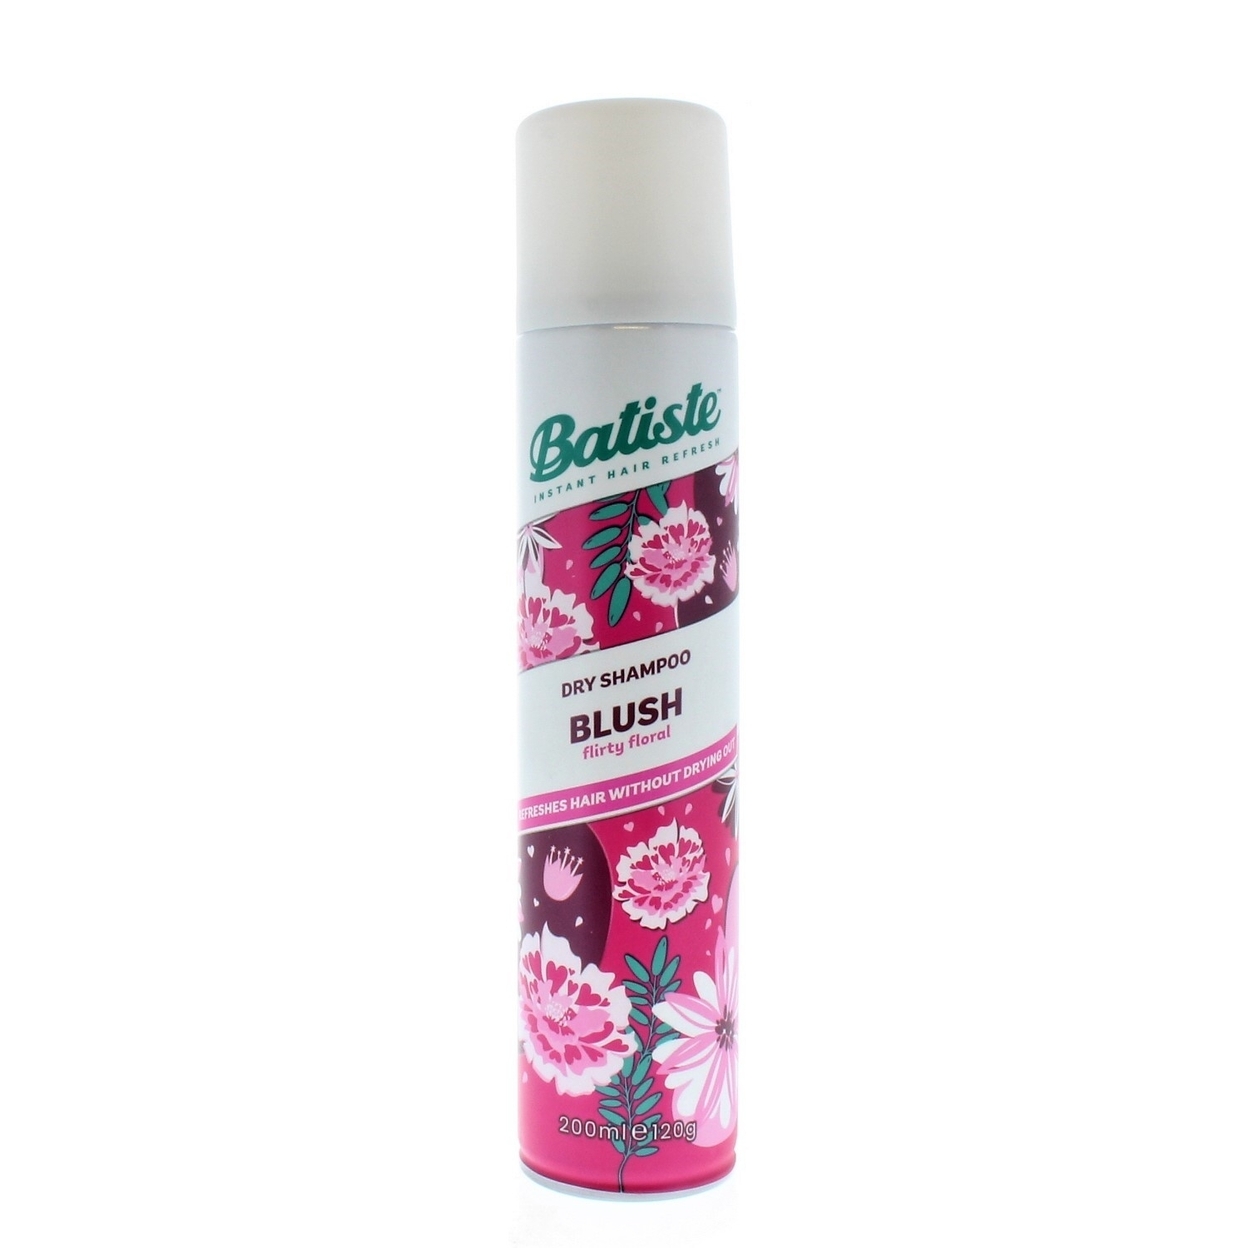 Batiste Instant Hair Refresh Dry Shampoo Blush Flirty Floral 200ml/120g